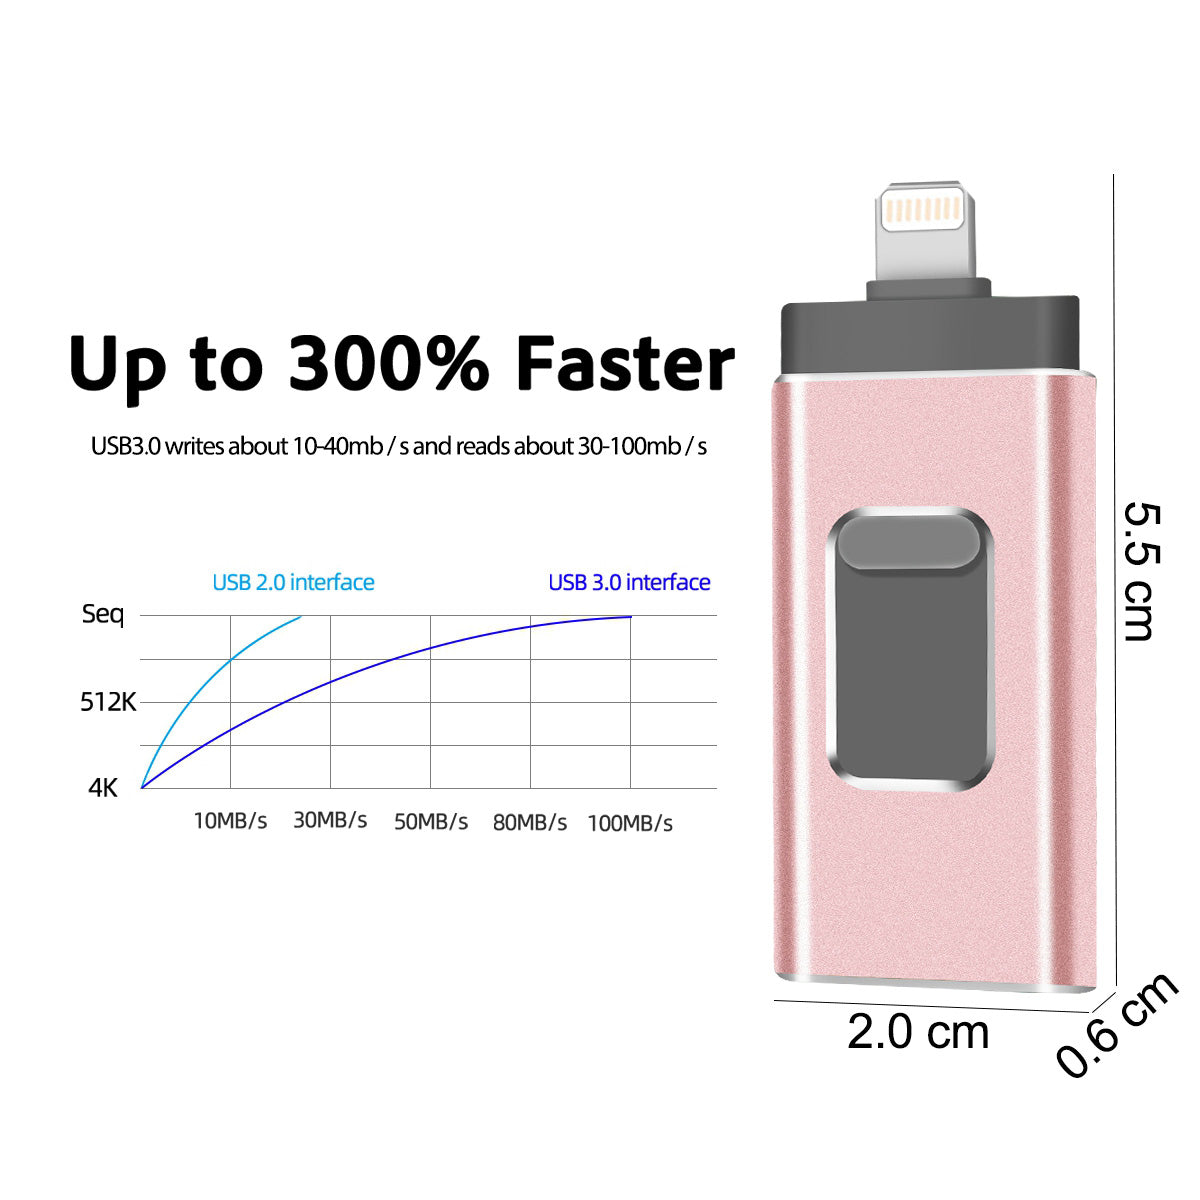 Uniqkart R-01B 32GB USB Memory Stick for iPhone Android PC, Portable USB 3.0 Flash Drive Thumb Drive Photo Stick - Pink